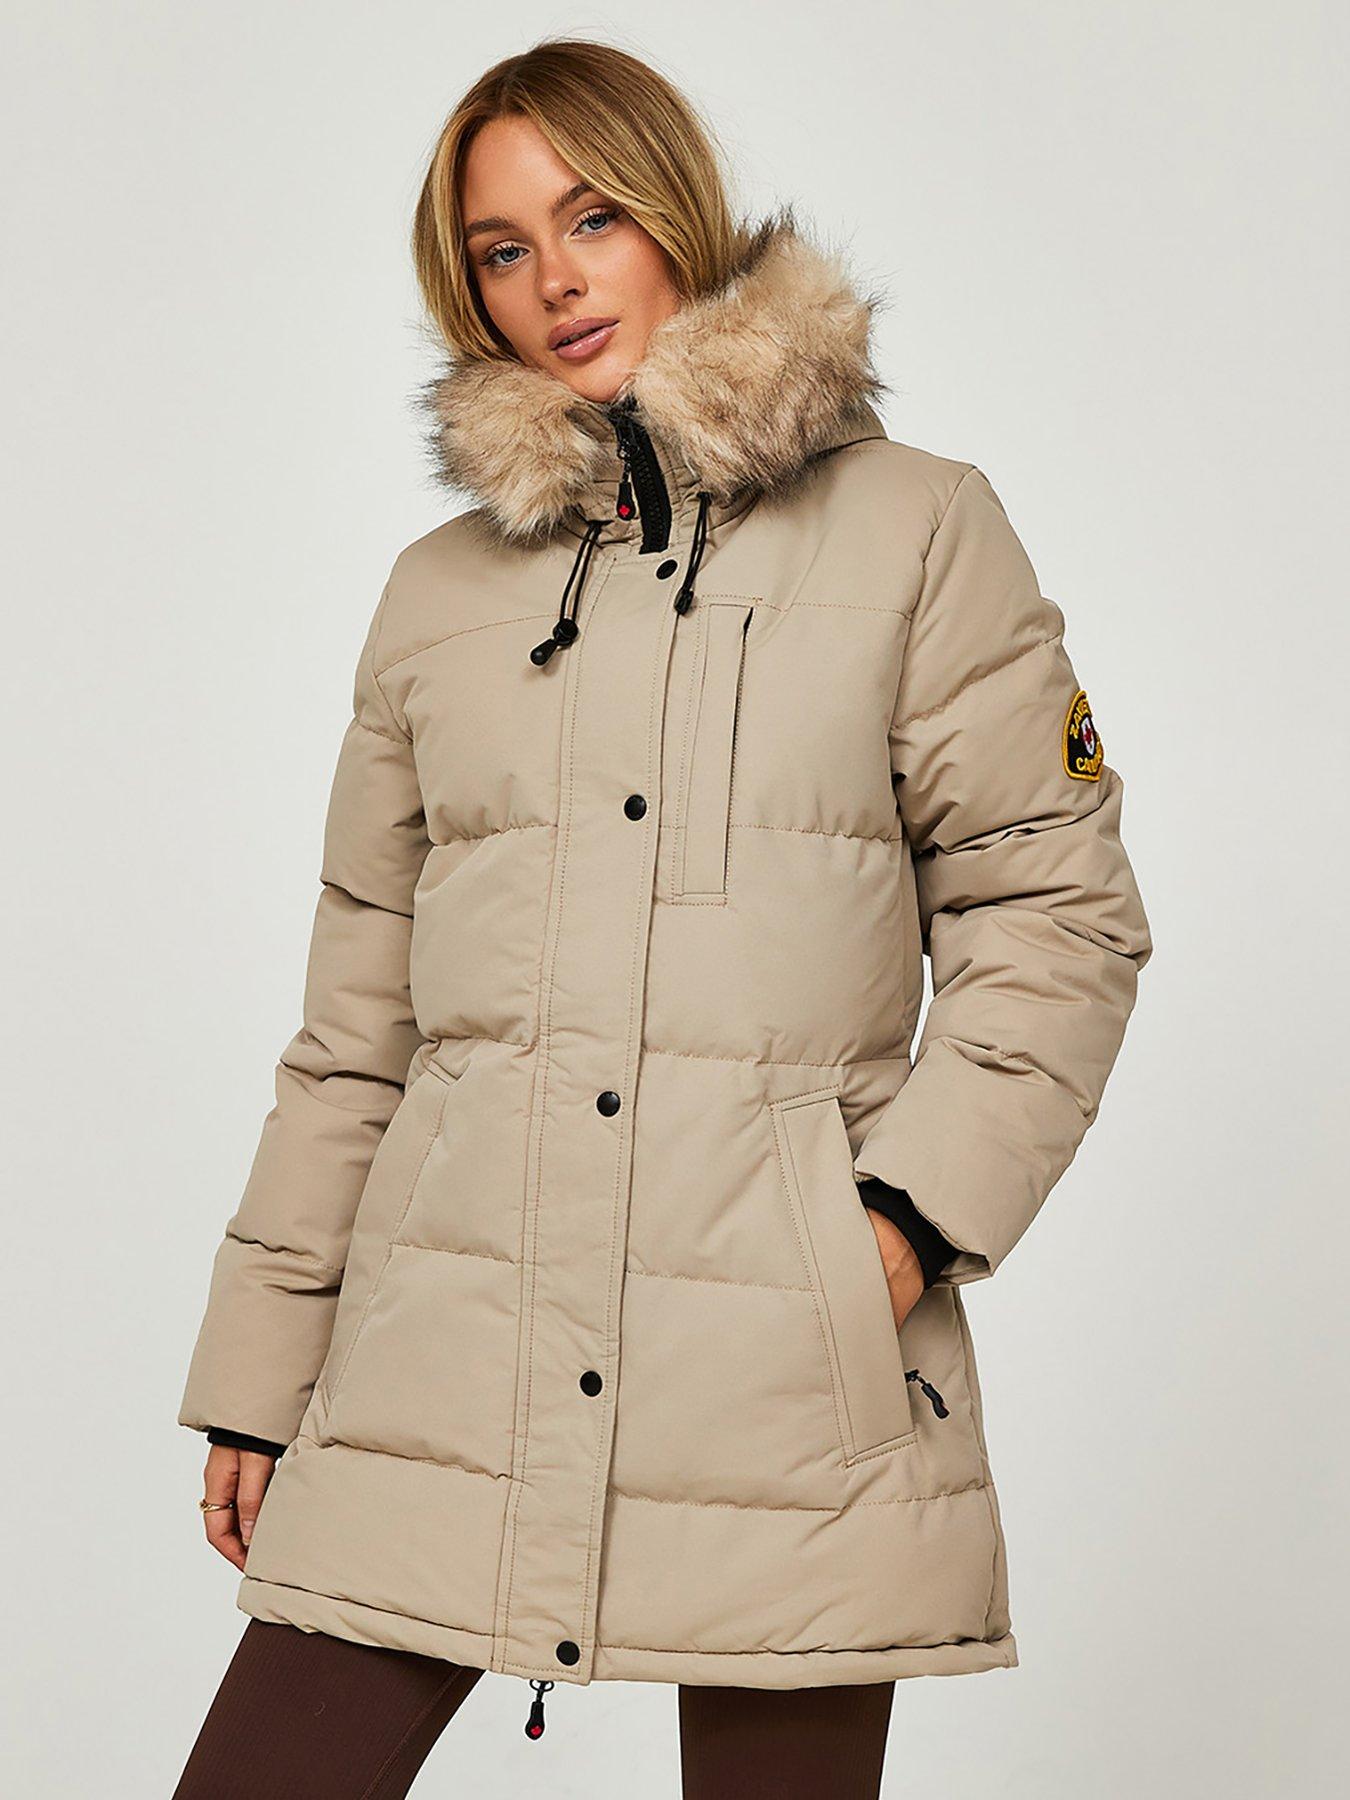 Zara jacket WOMEN FASHION Jackets Embroidery Beige M discount 66% 